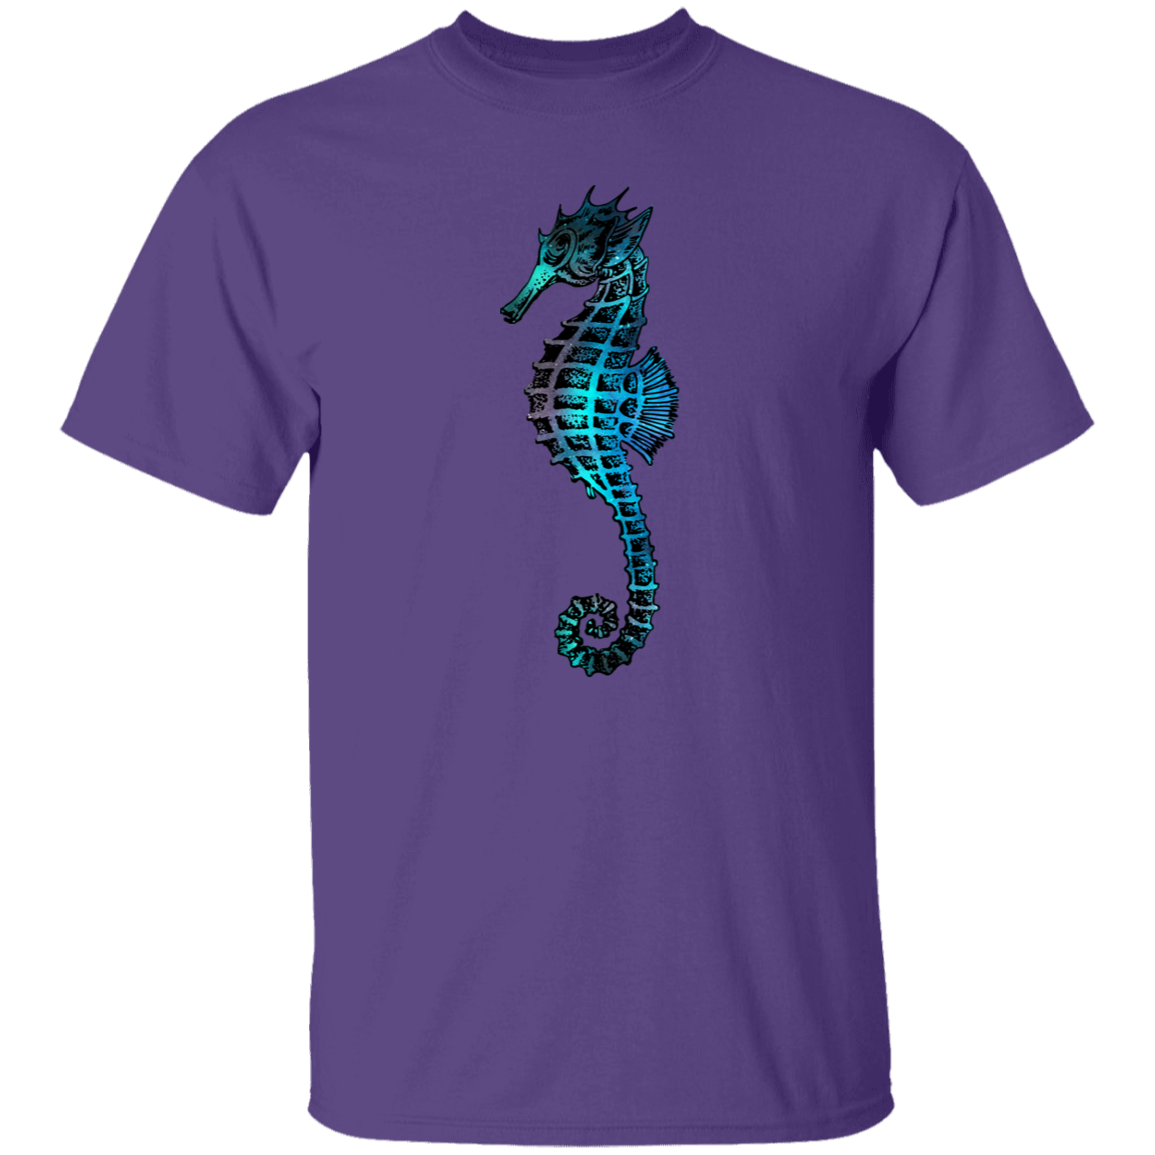 Colorful Seahorse - T-shirts, Hoodies and Sweatshirts